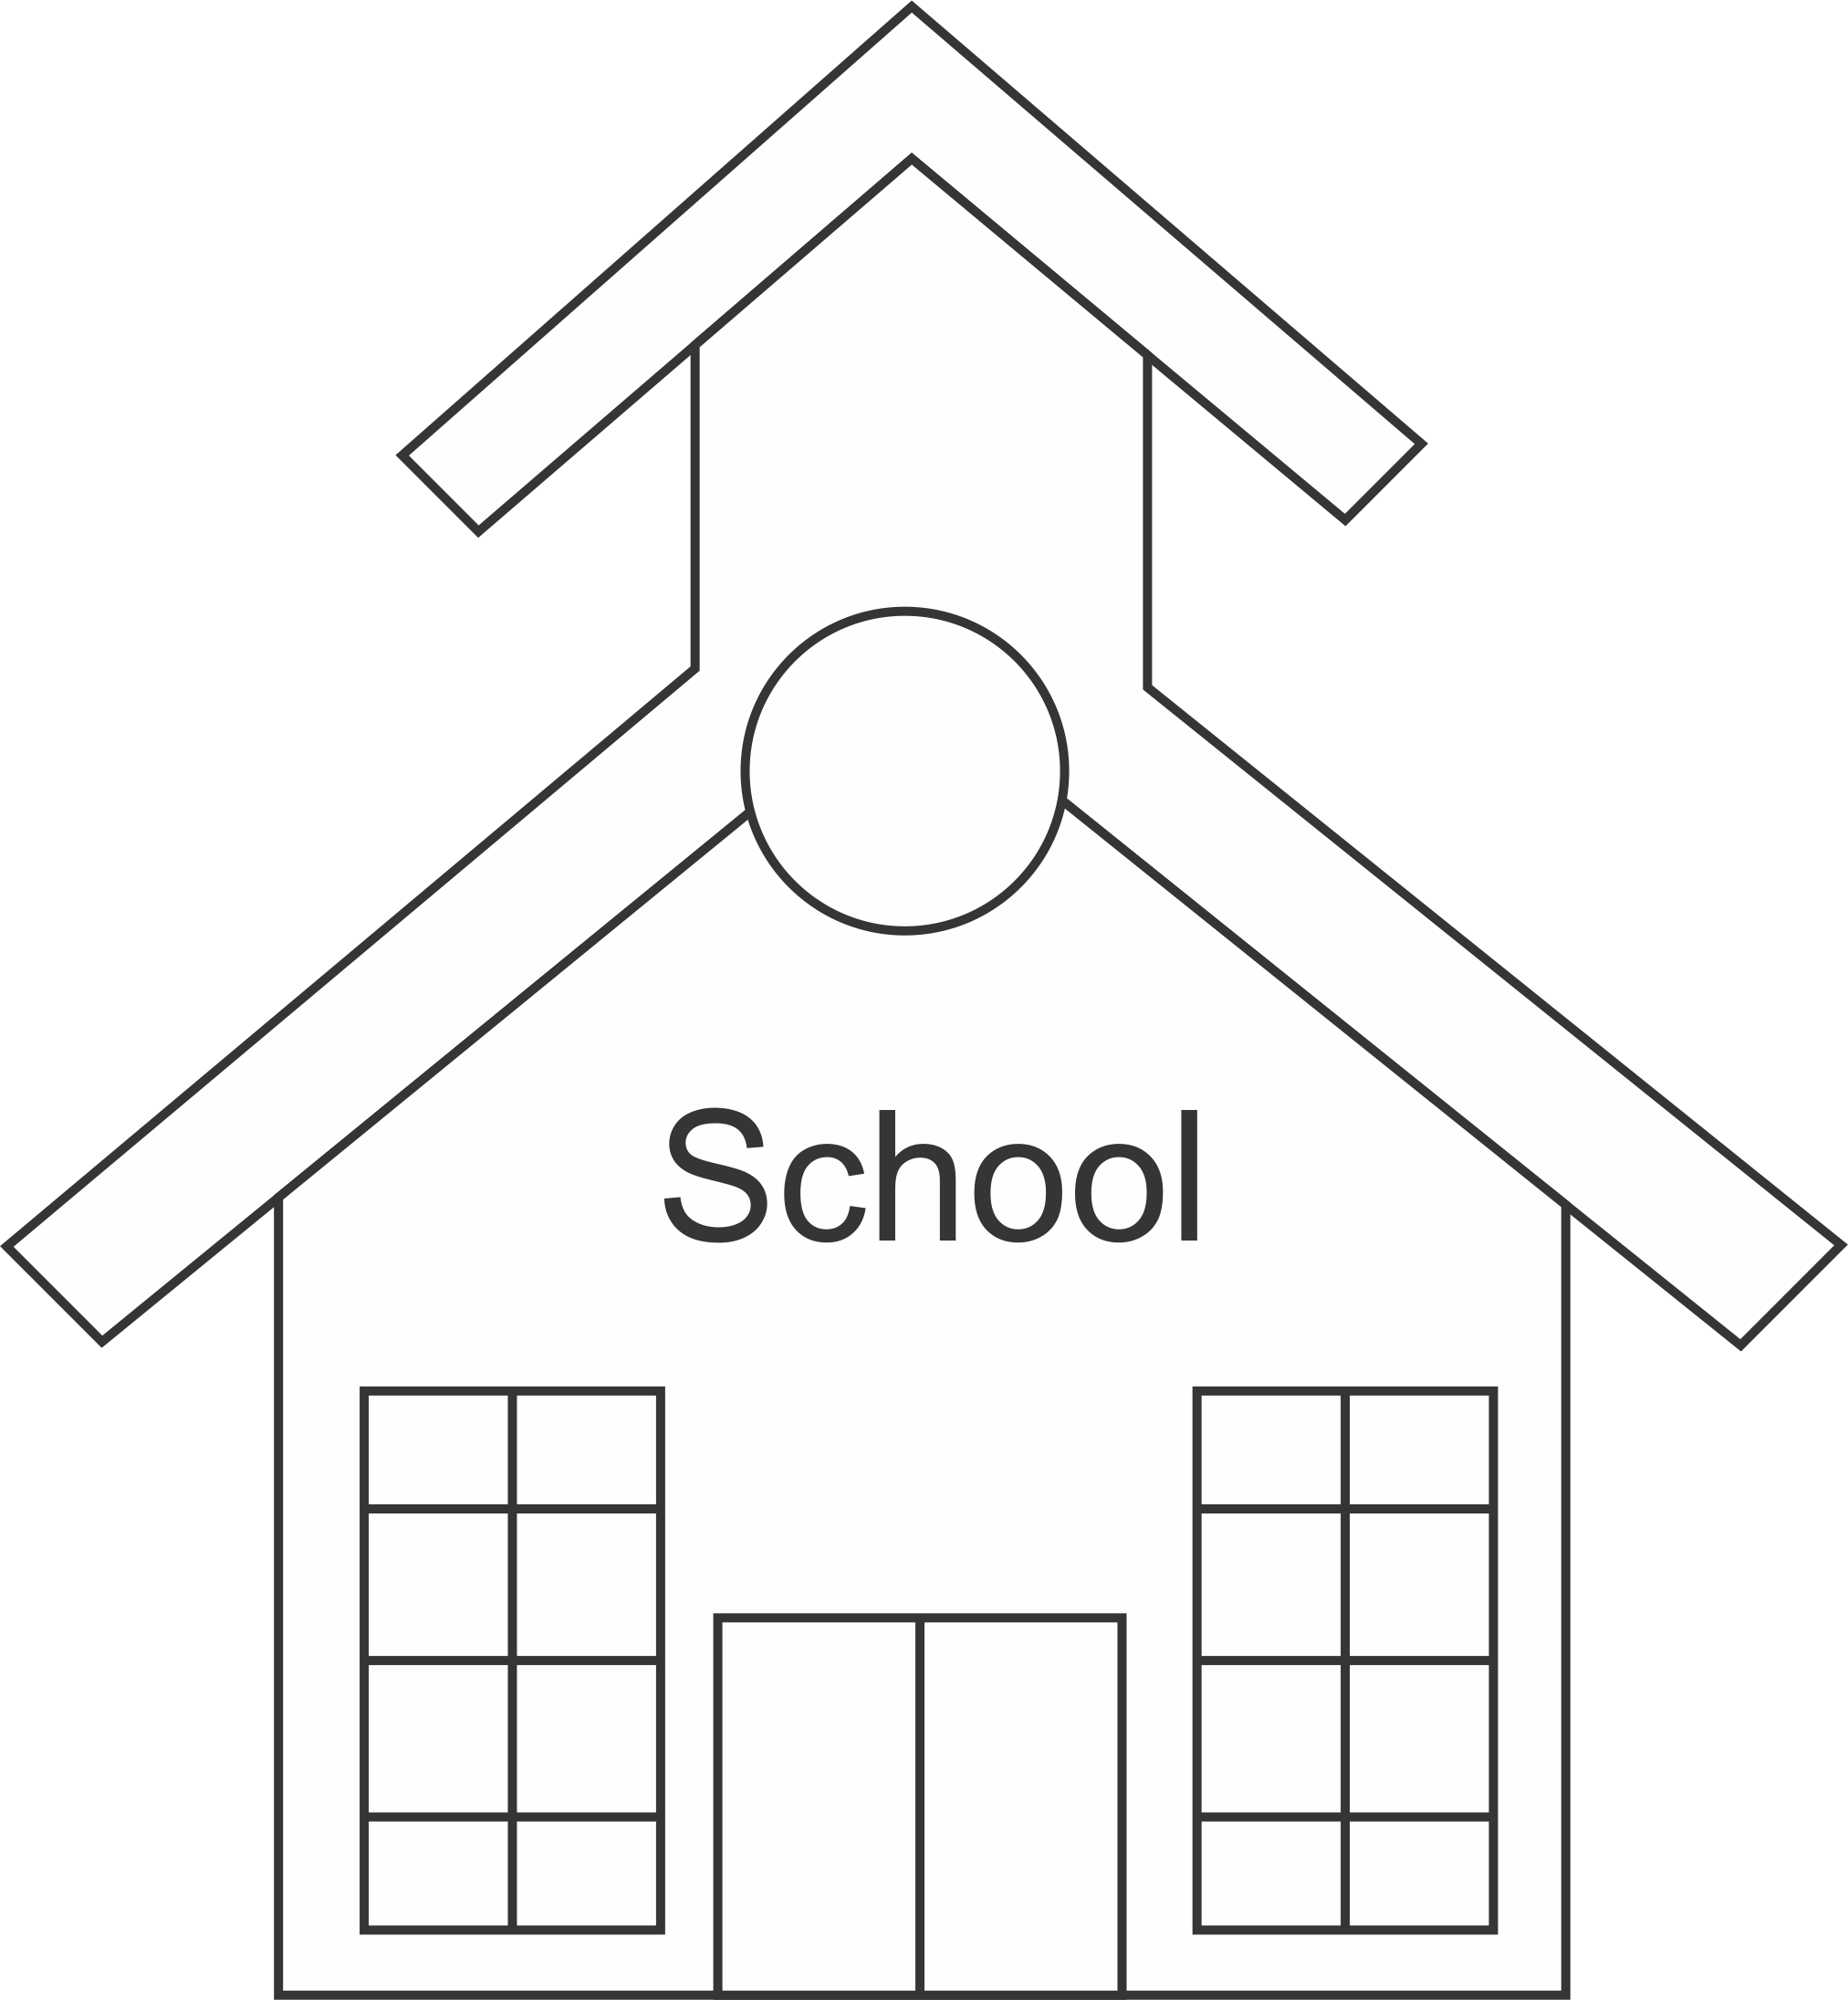 Schoolhouse silhouette clipart 5